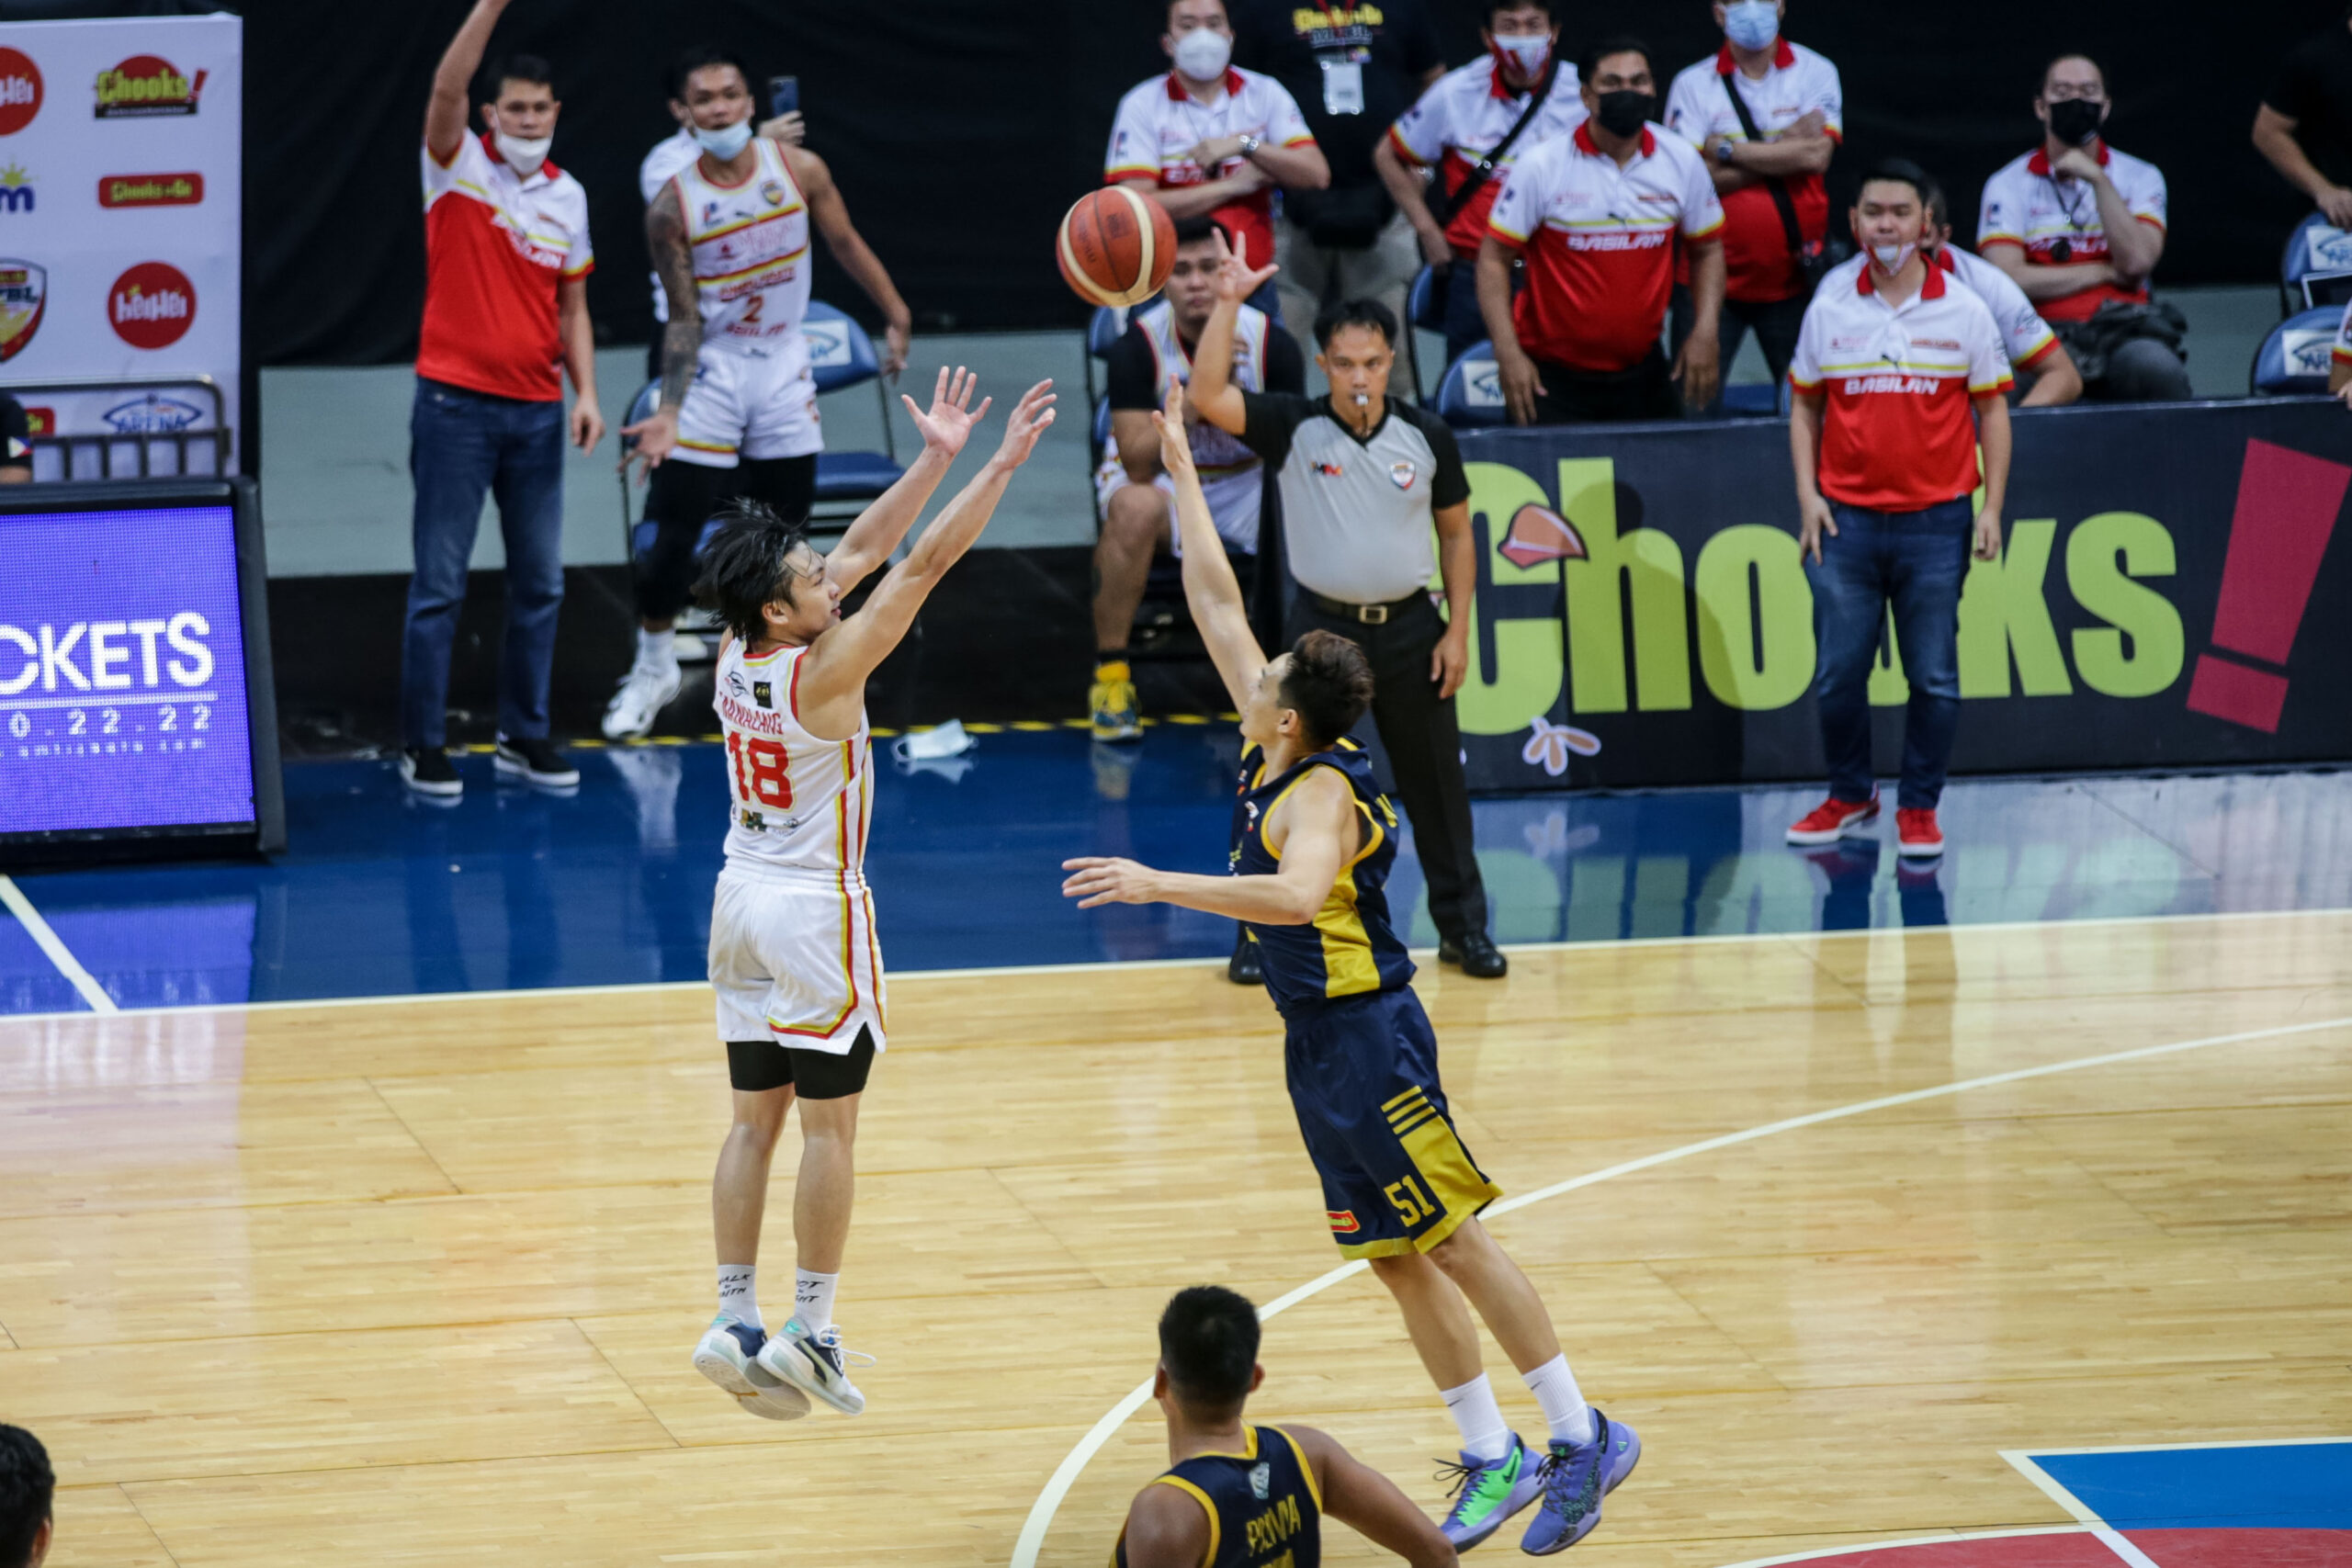 2021-Chooks-MPBL-Basilan-vs-Nueva-Ecija-Philip-Manalang-winner-scaled Juico used not winning MPBL MVP as added motivation in Final Basketball MPBL News  - philippine sports news